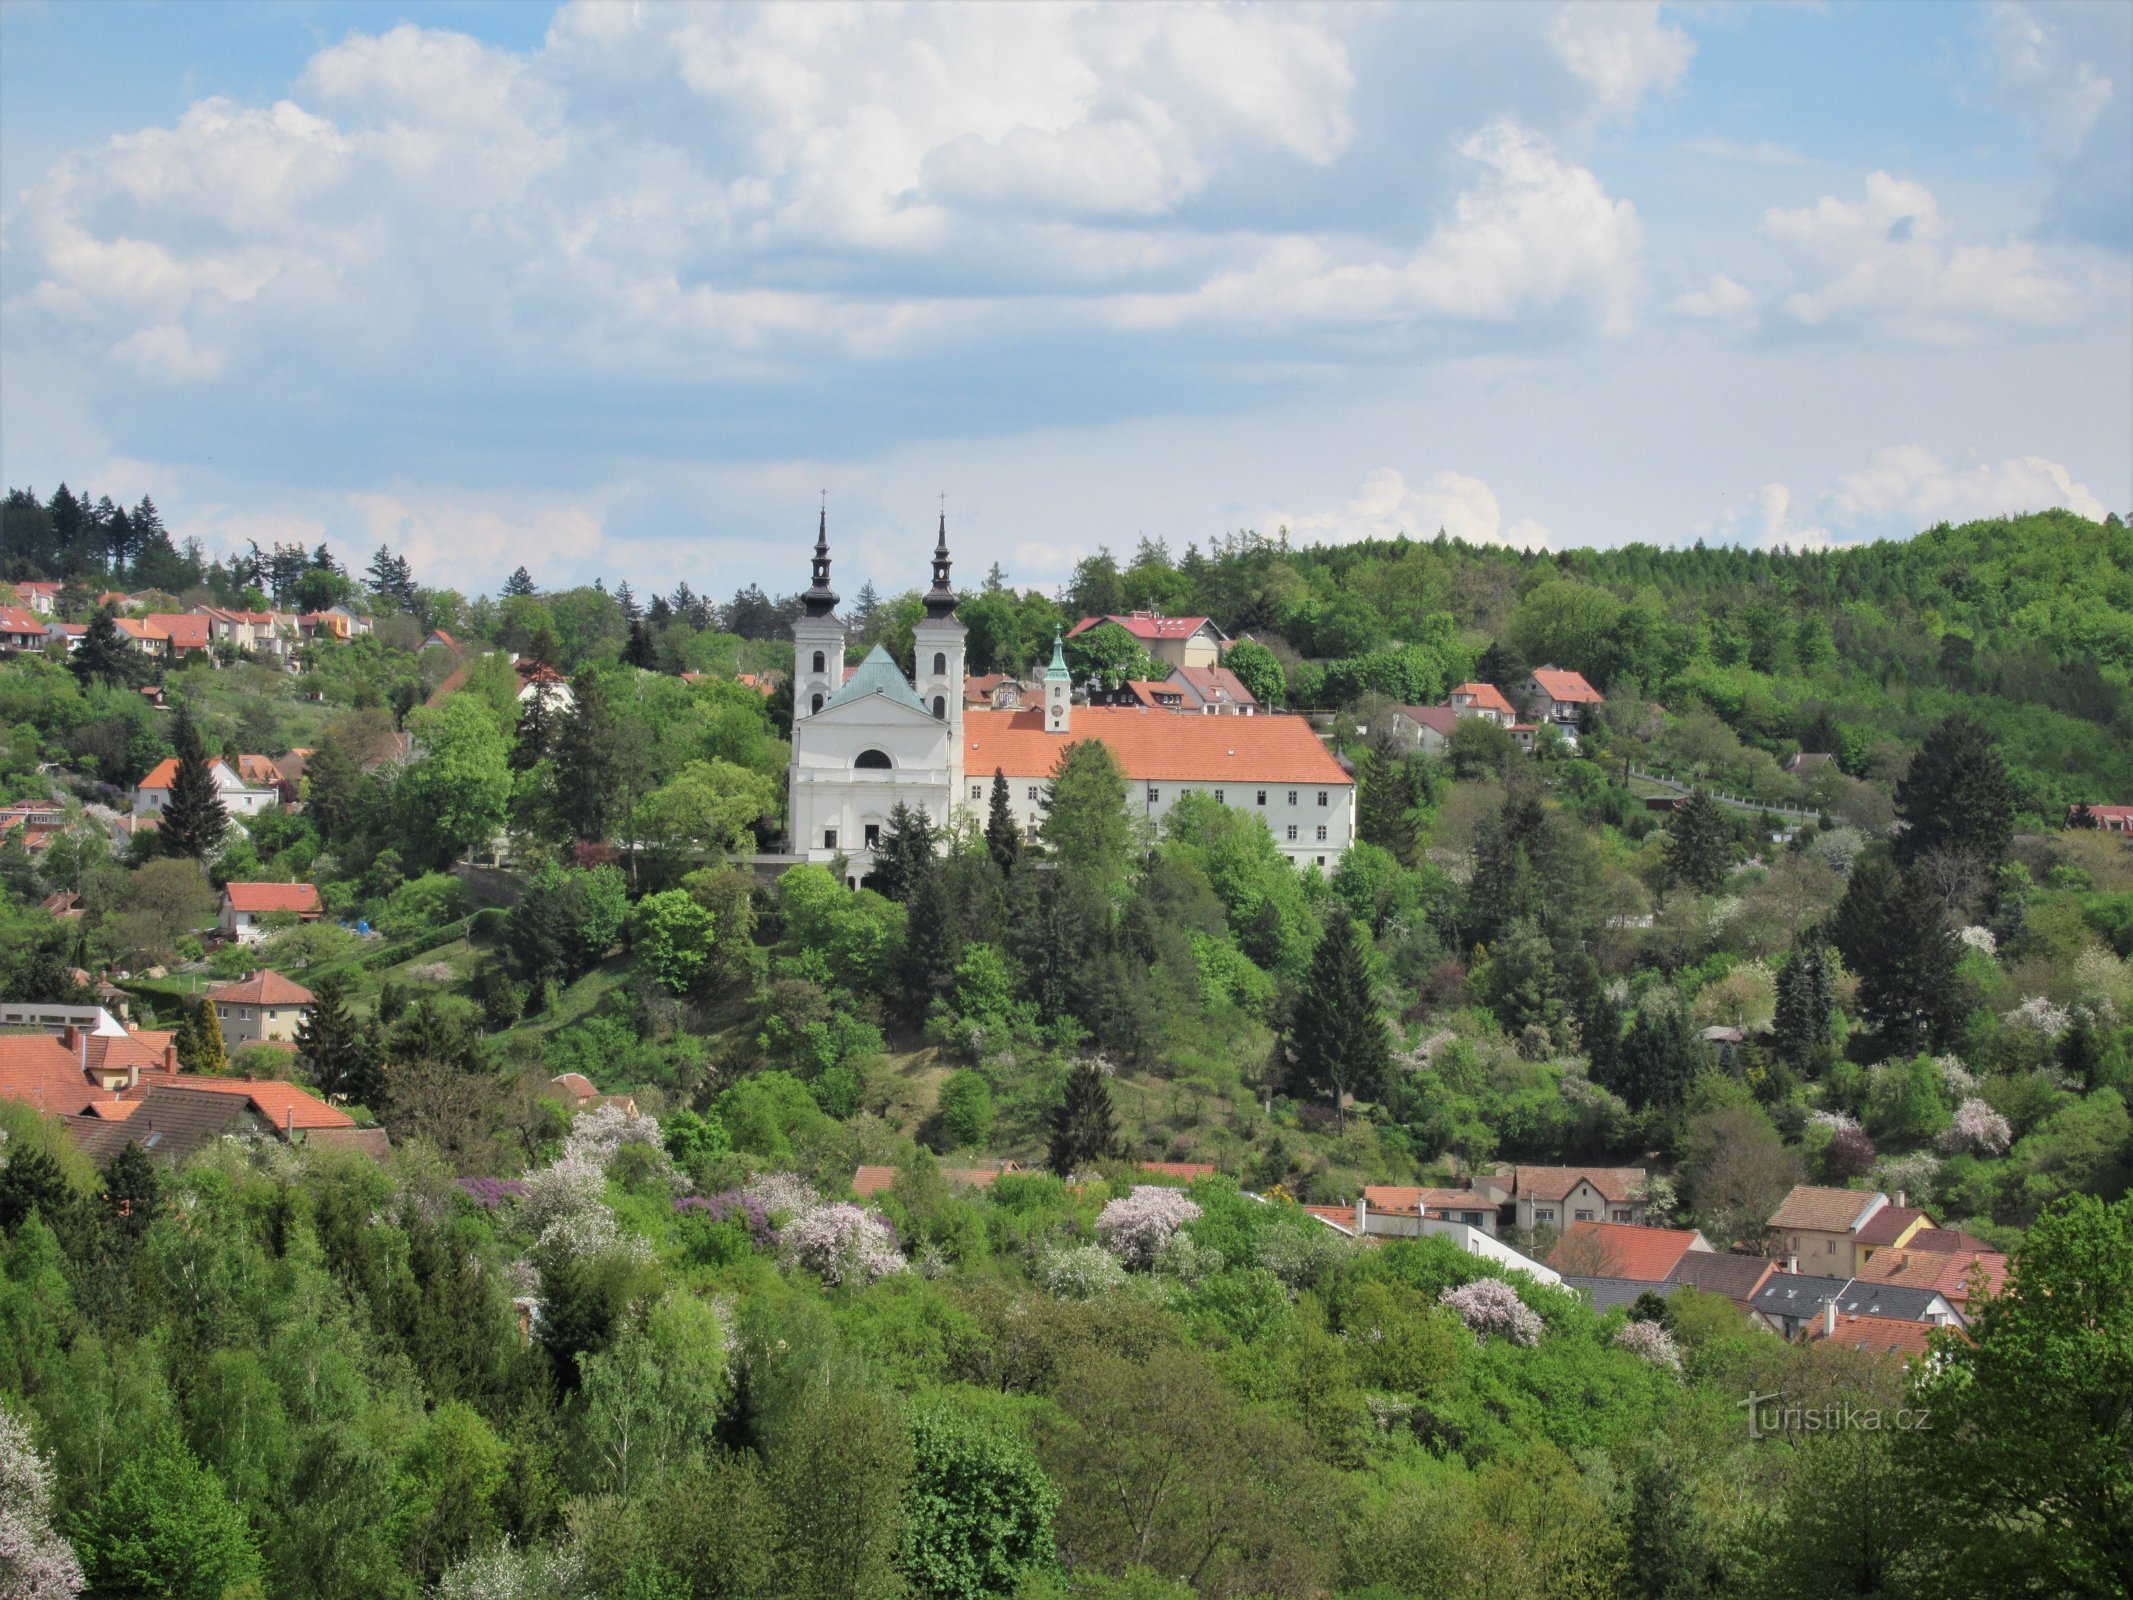 Vranov lähellä Brnoa - näkymä kylään